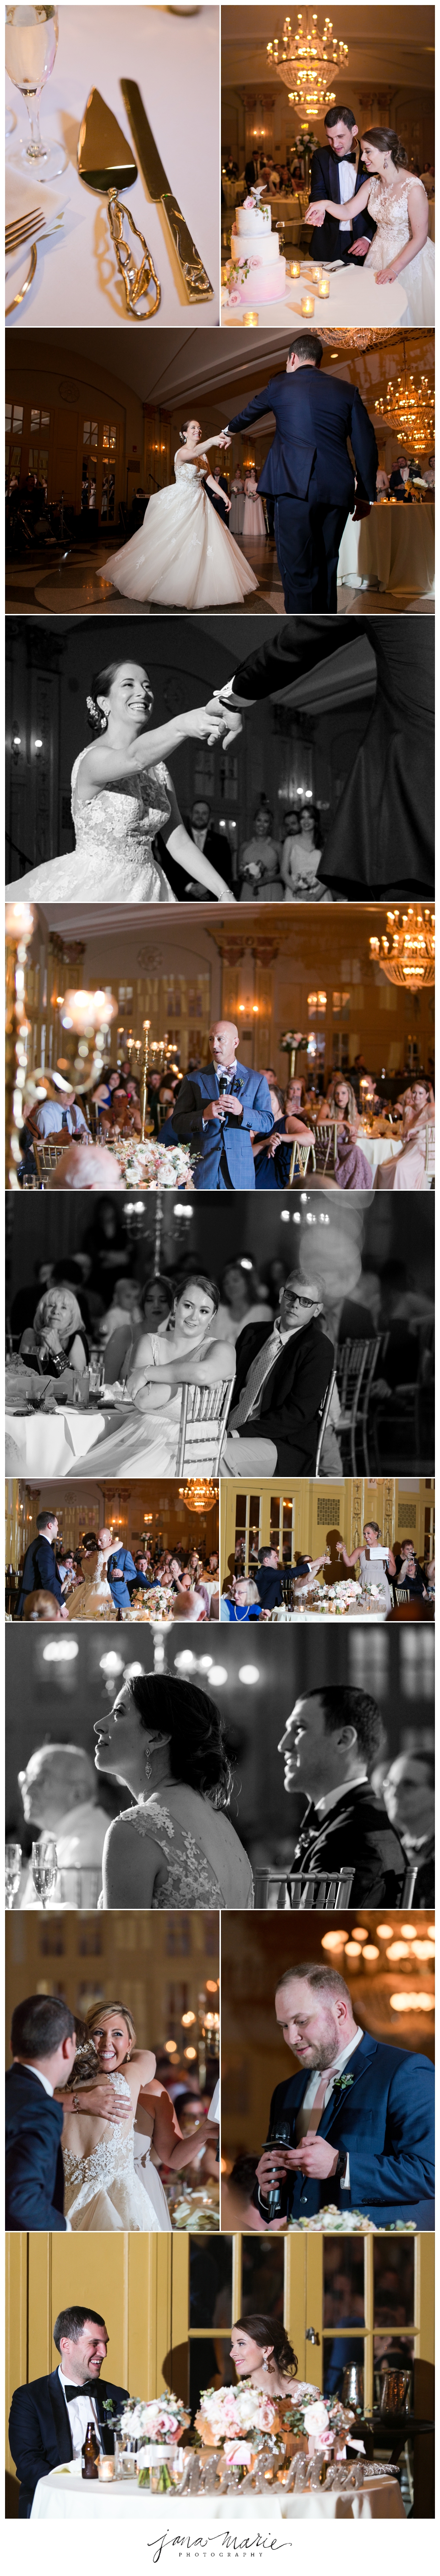 Hilton President, Colonnial Church, Kansas City wedding, Summer wedding, Jessica & Jeff, Good Earth Floral